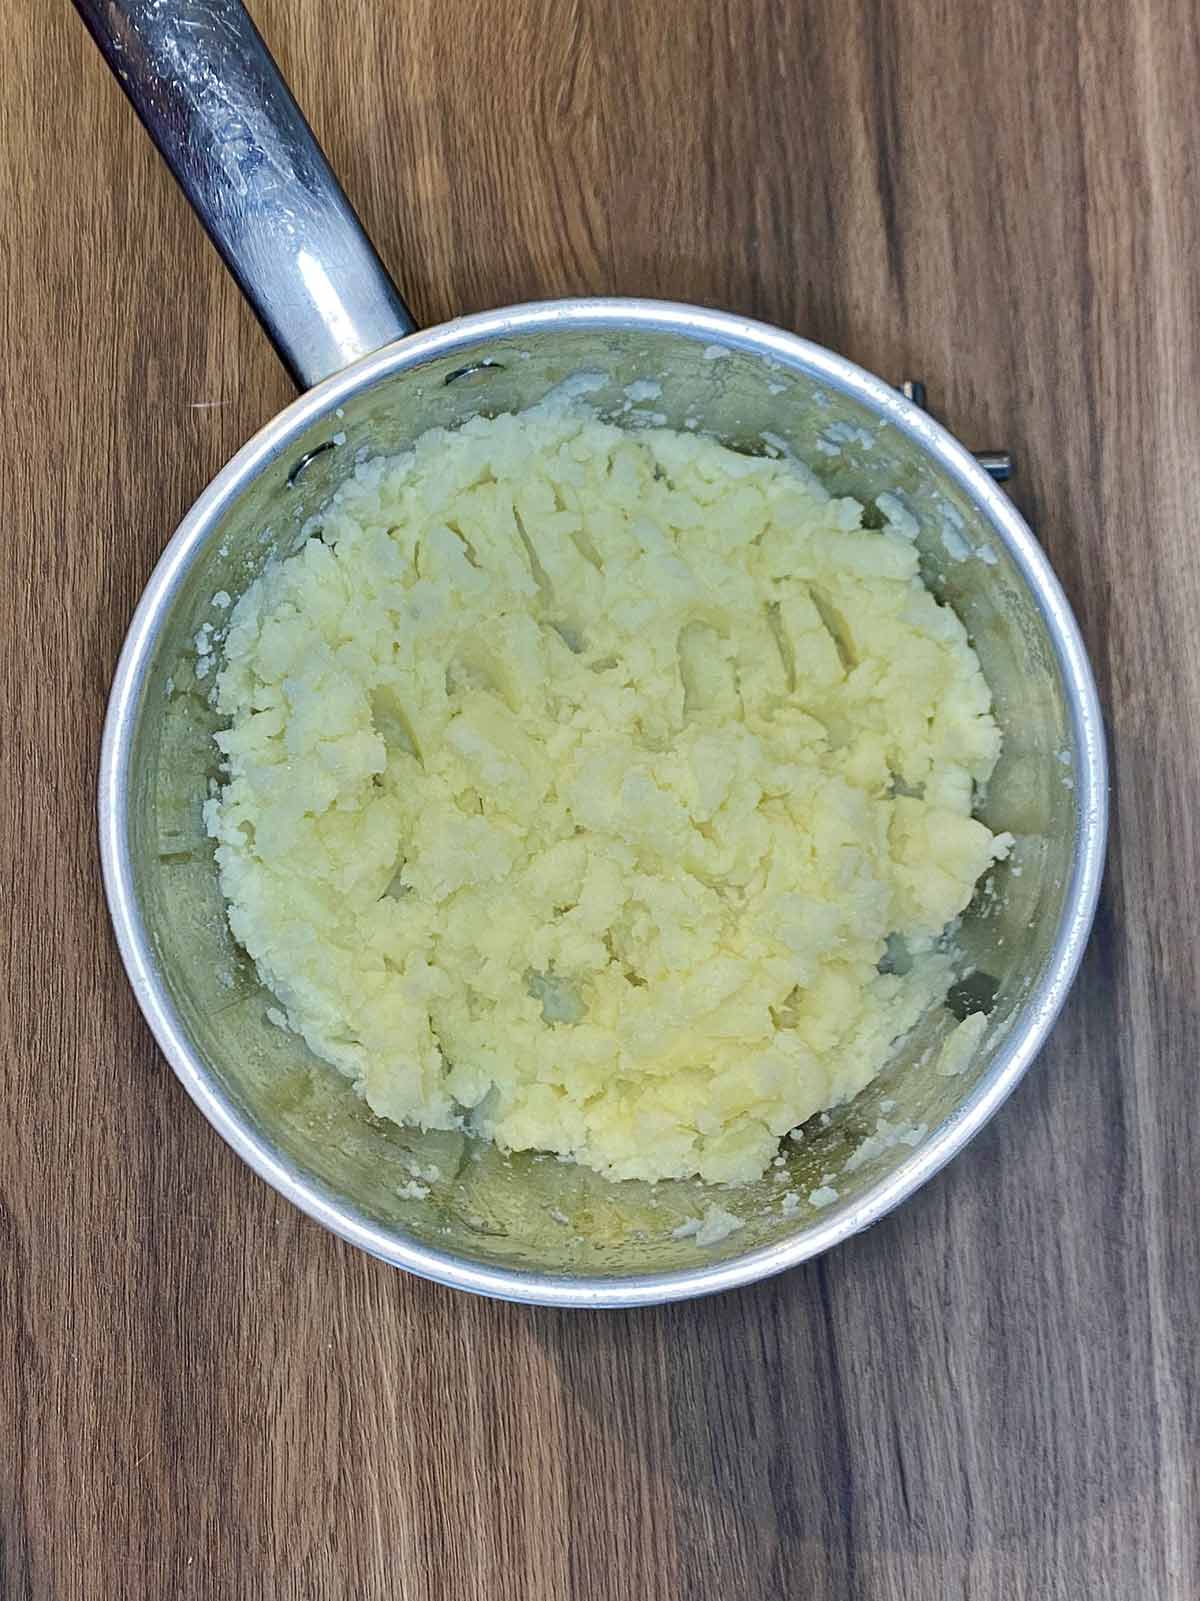 Mashed potato in a saucepan.